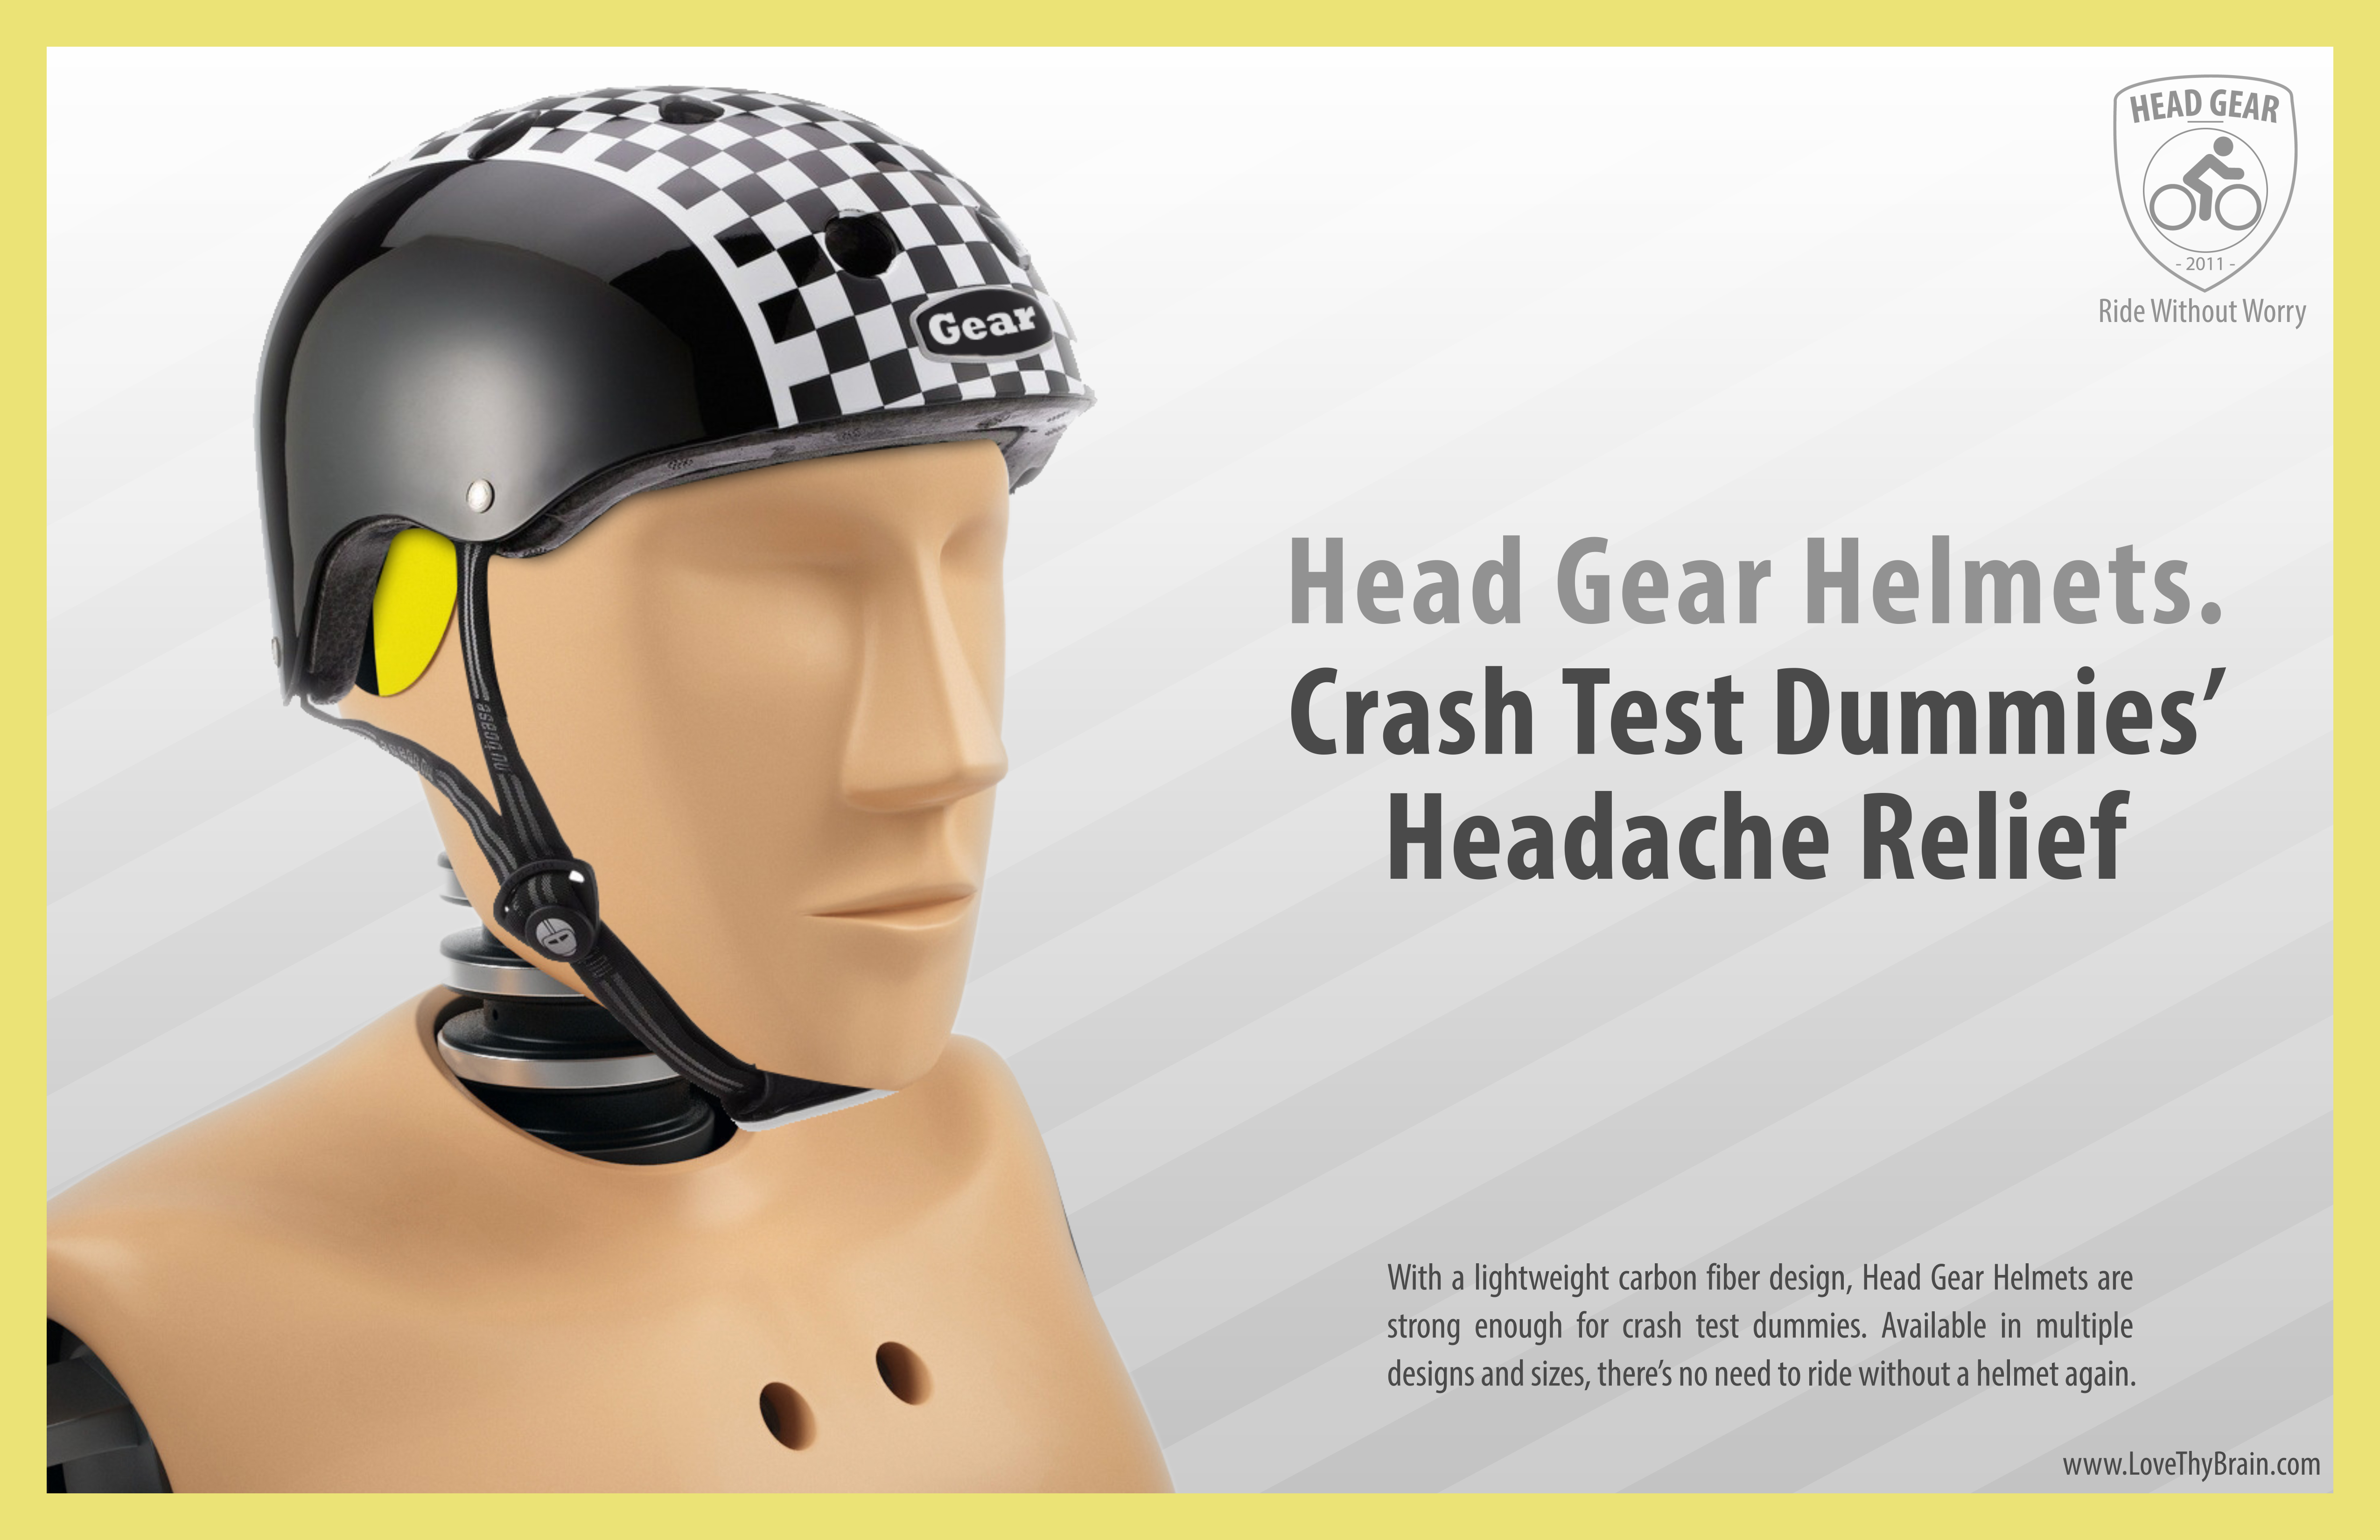 Head Gear Helmets Crash Test Dummy Ad